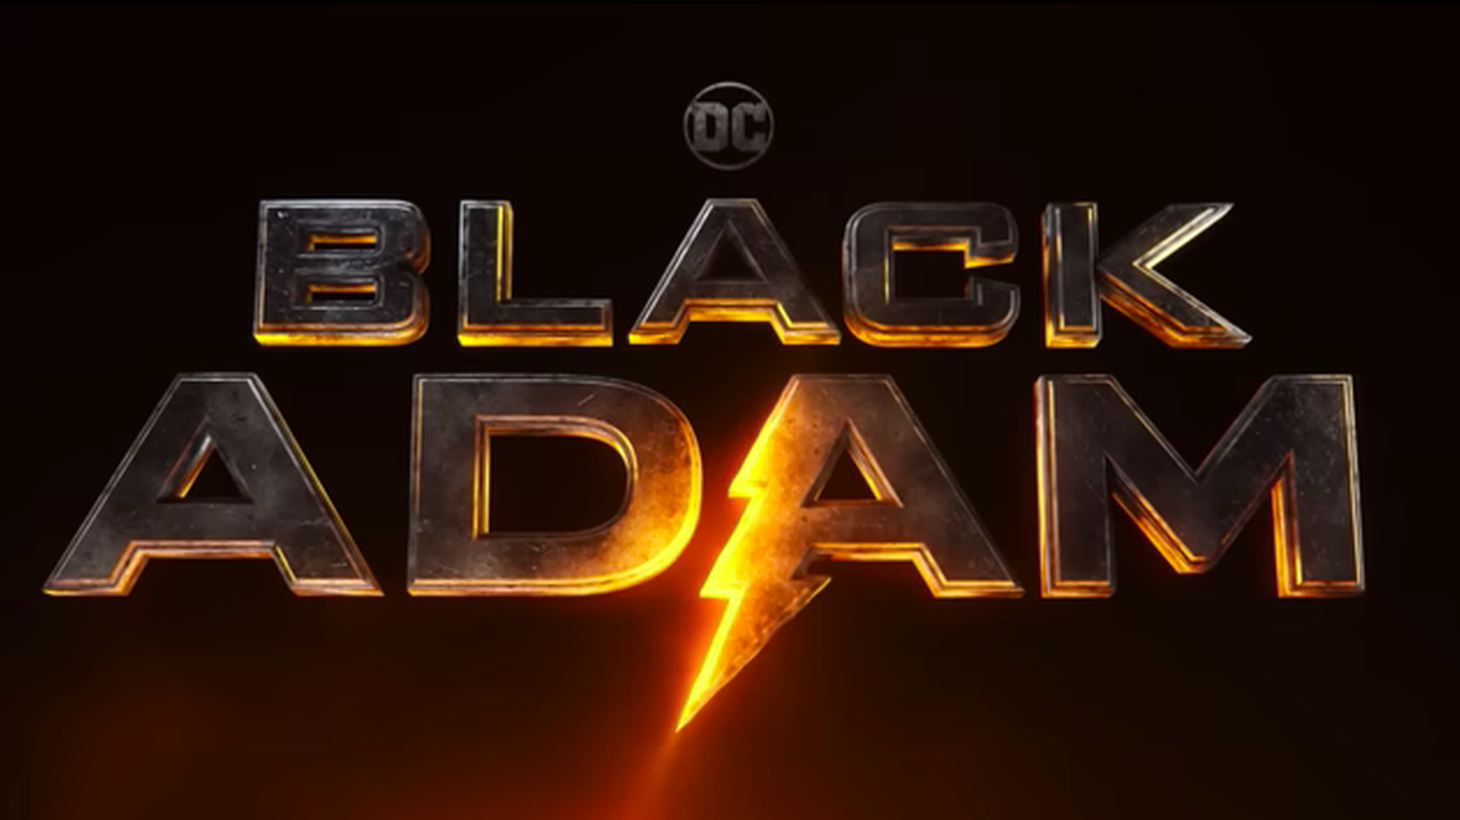 Black Adam' Dwayne Johnson Declined To Shoot The Post-Credit Scene